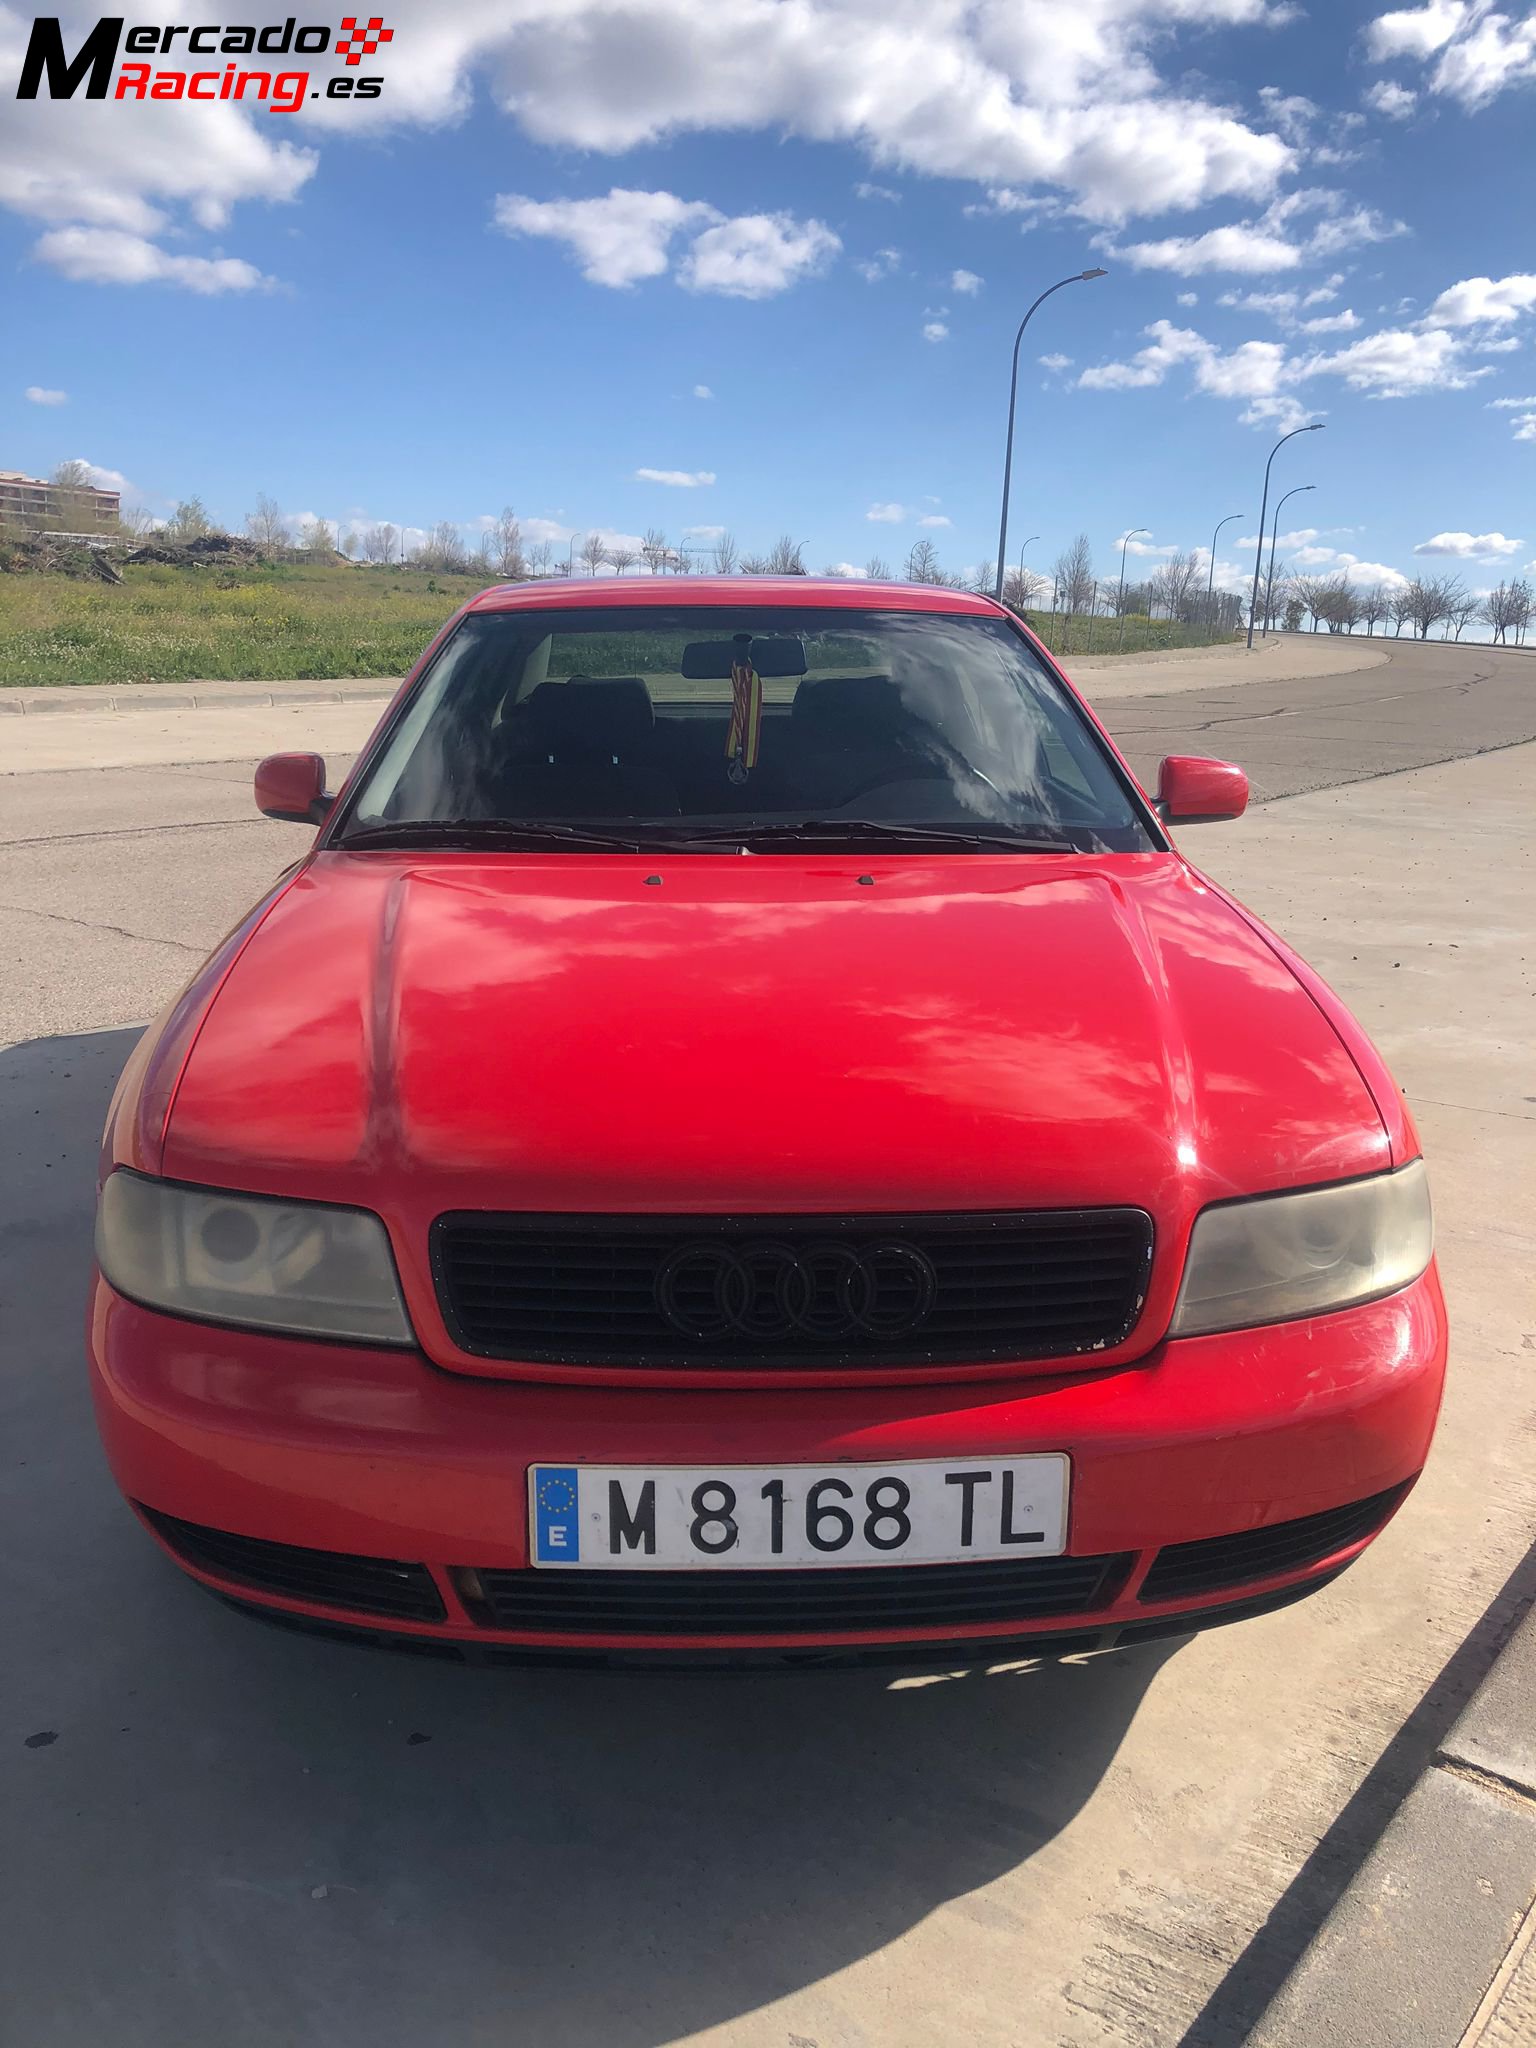 Audi a4 sedán 1.8t aeb 1996 150 cv 